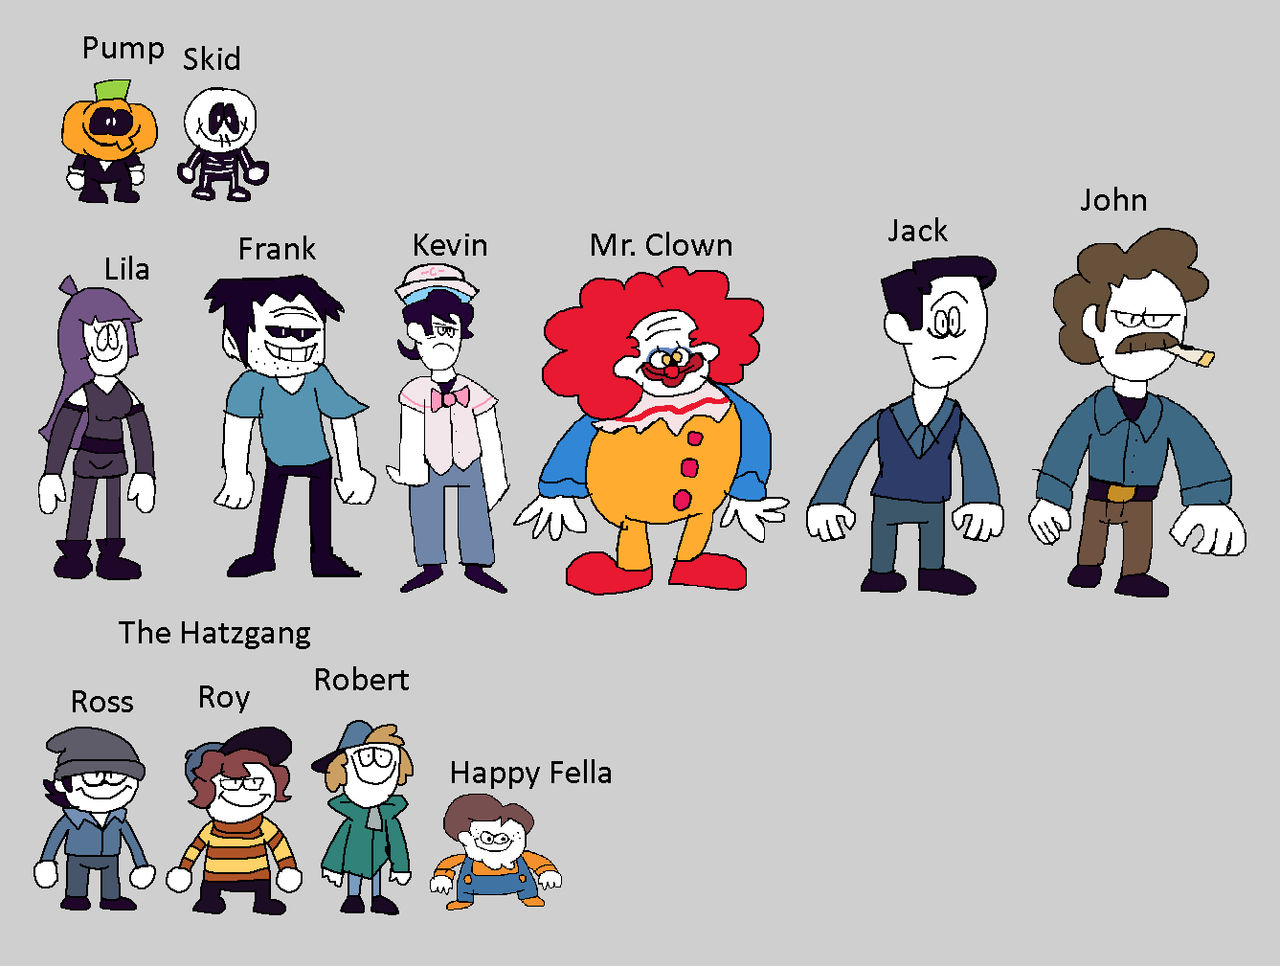 Sr Pelo Spooky Month Characters (7.81 MB) by Abbysek on DeviantArt